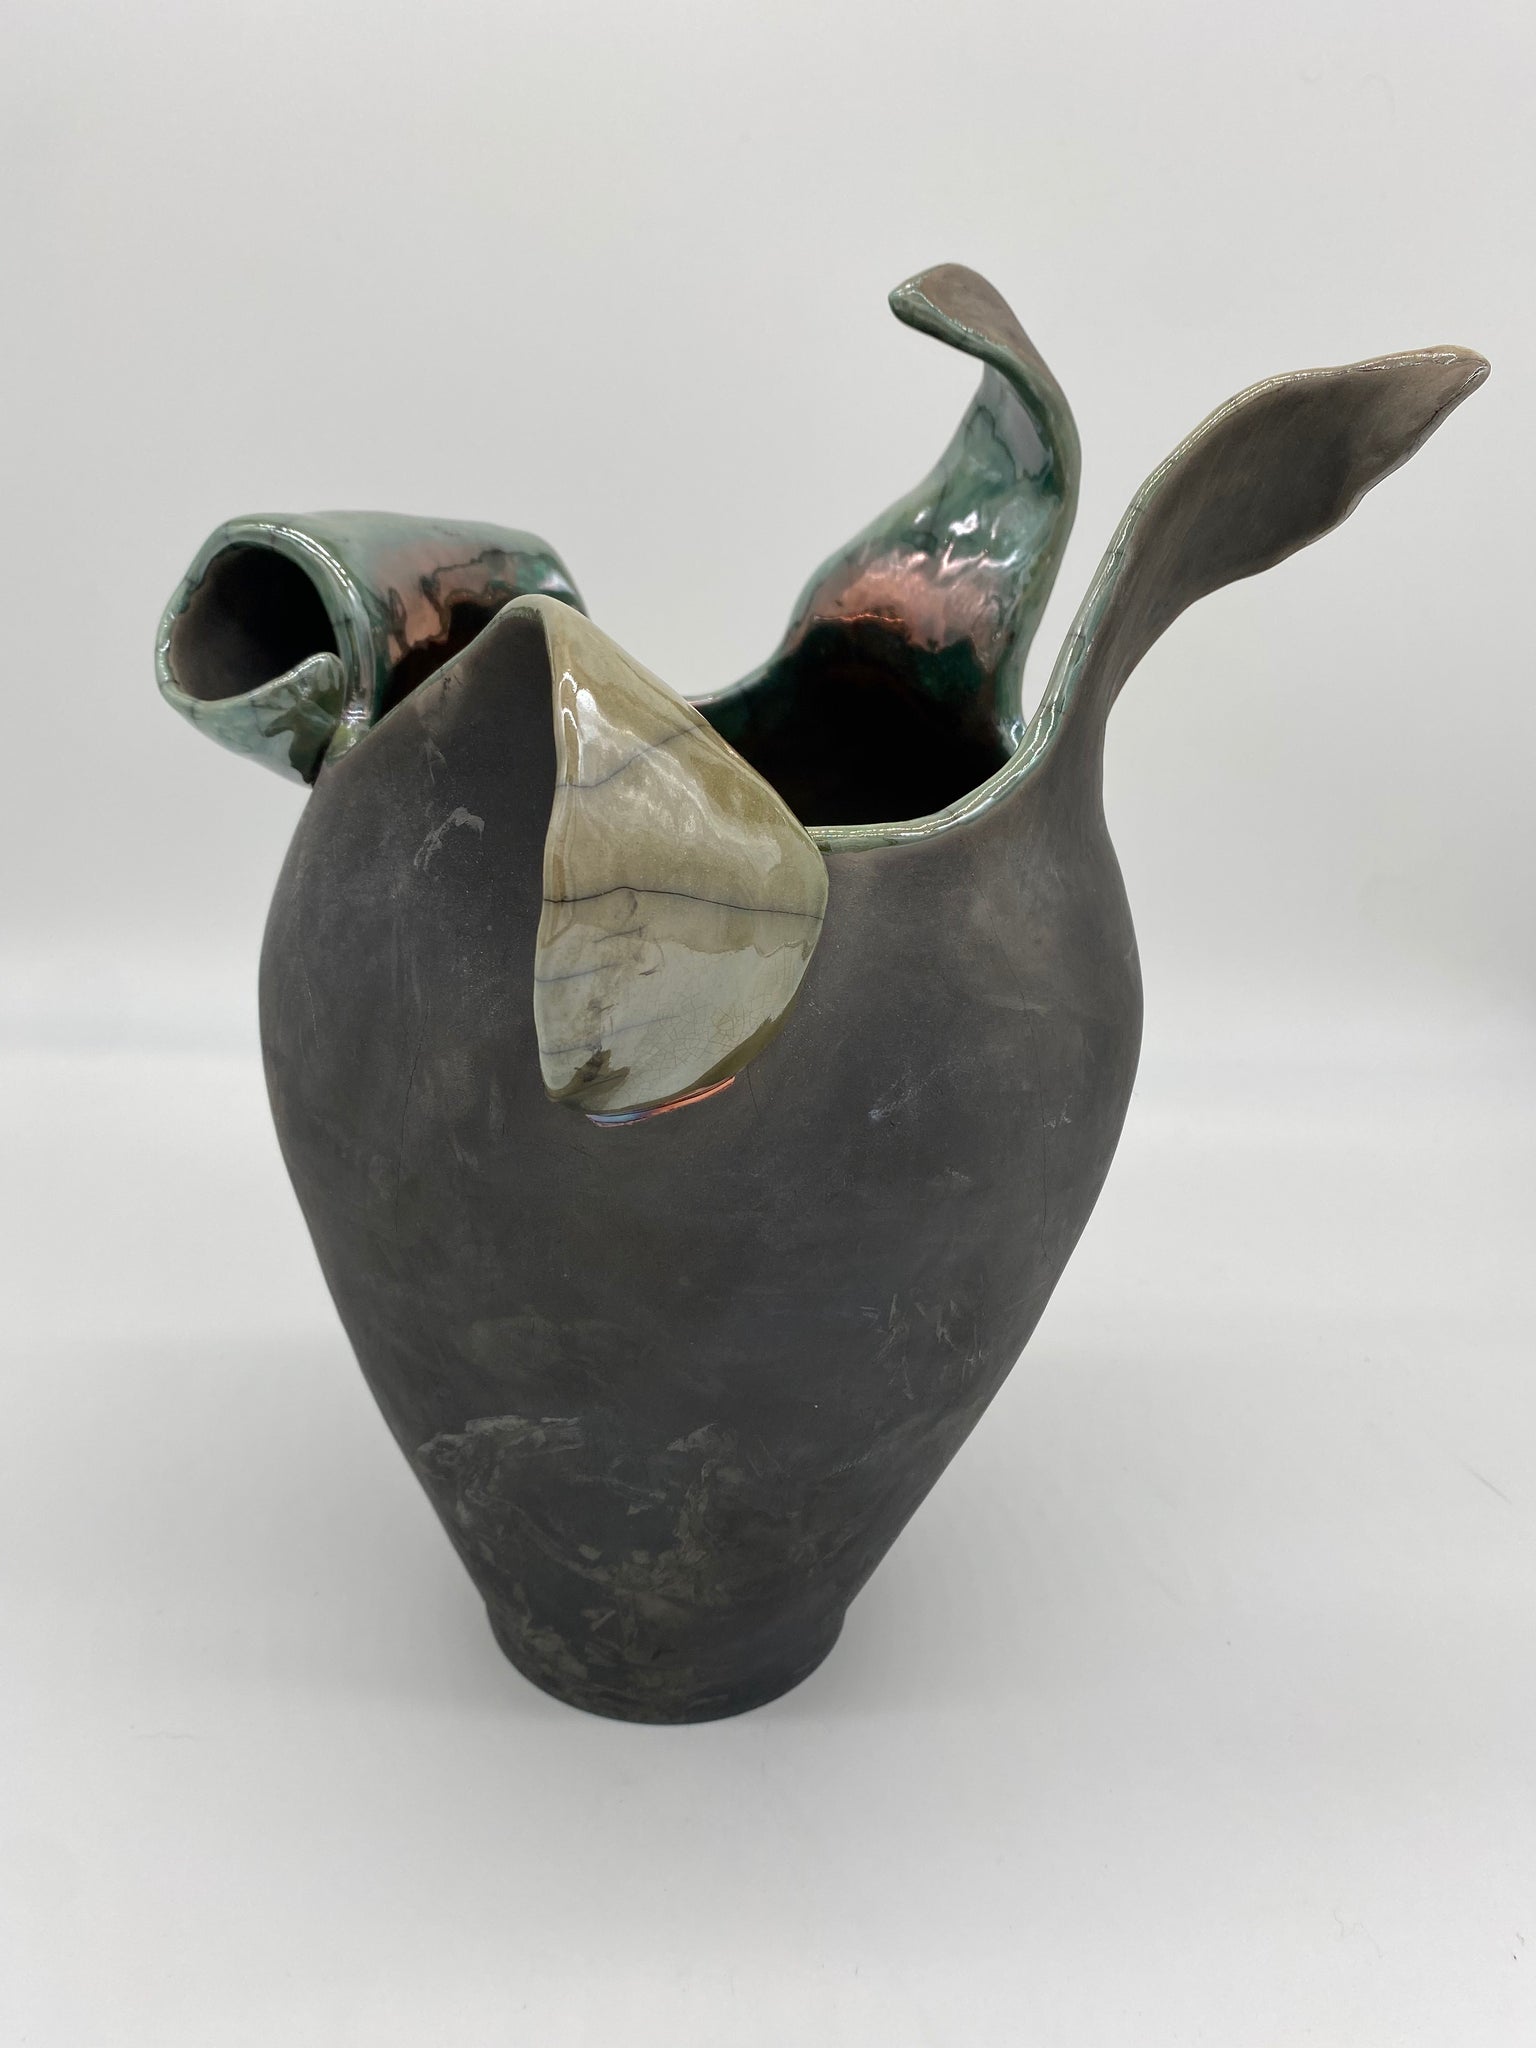 Raku fired thrown and altered white stoneware ceramic artist Jane Kleiman of NJ